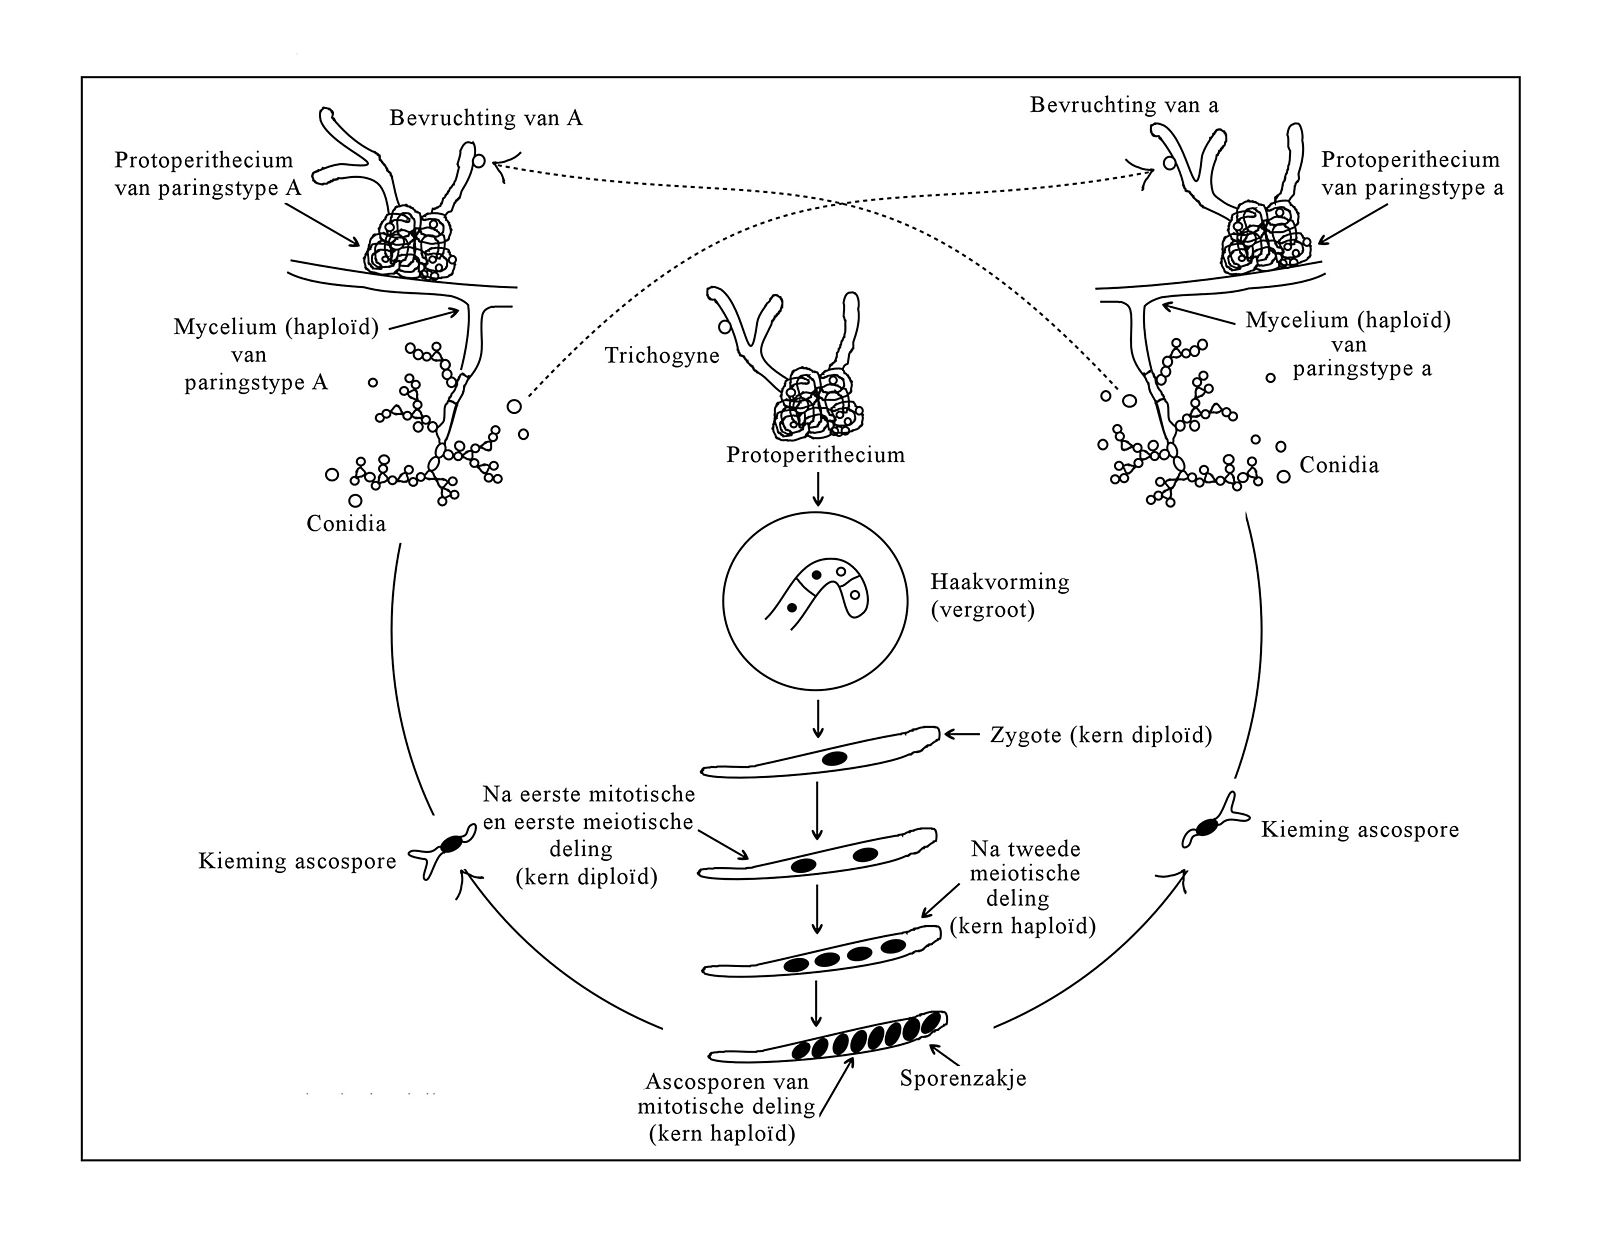 Levenscyclus van Neurospora crassa